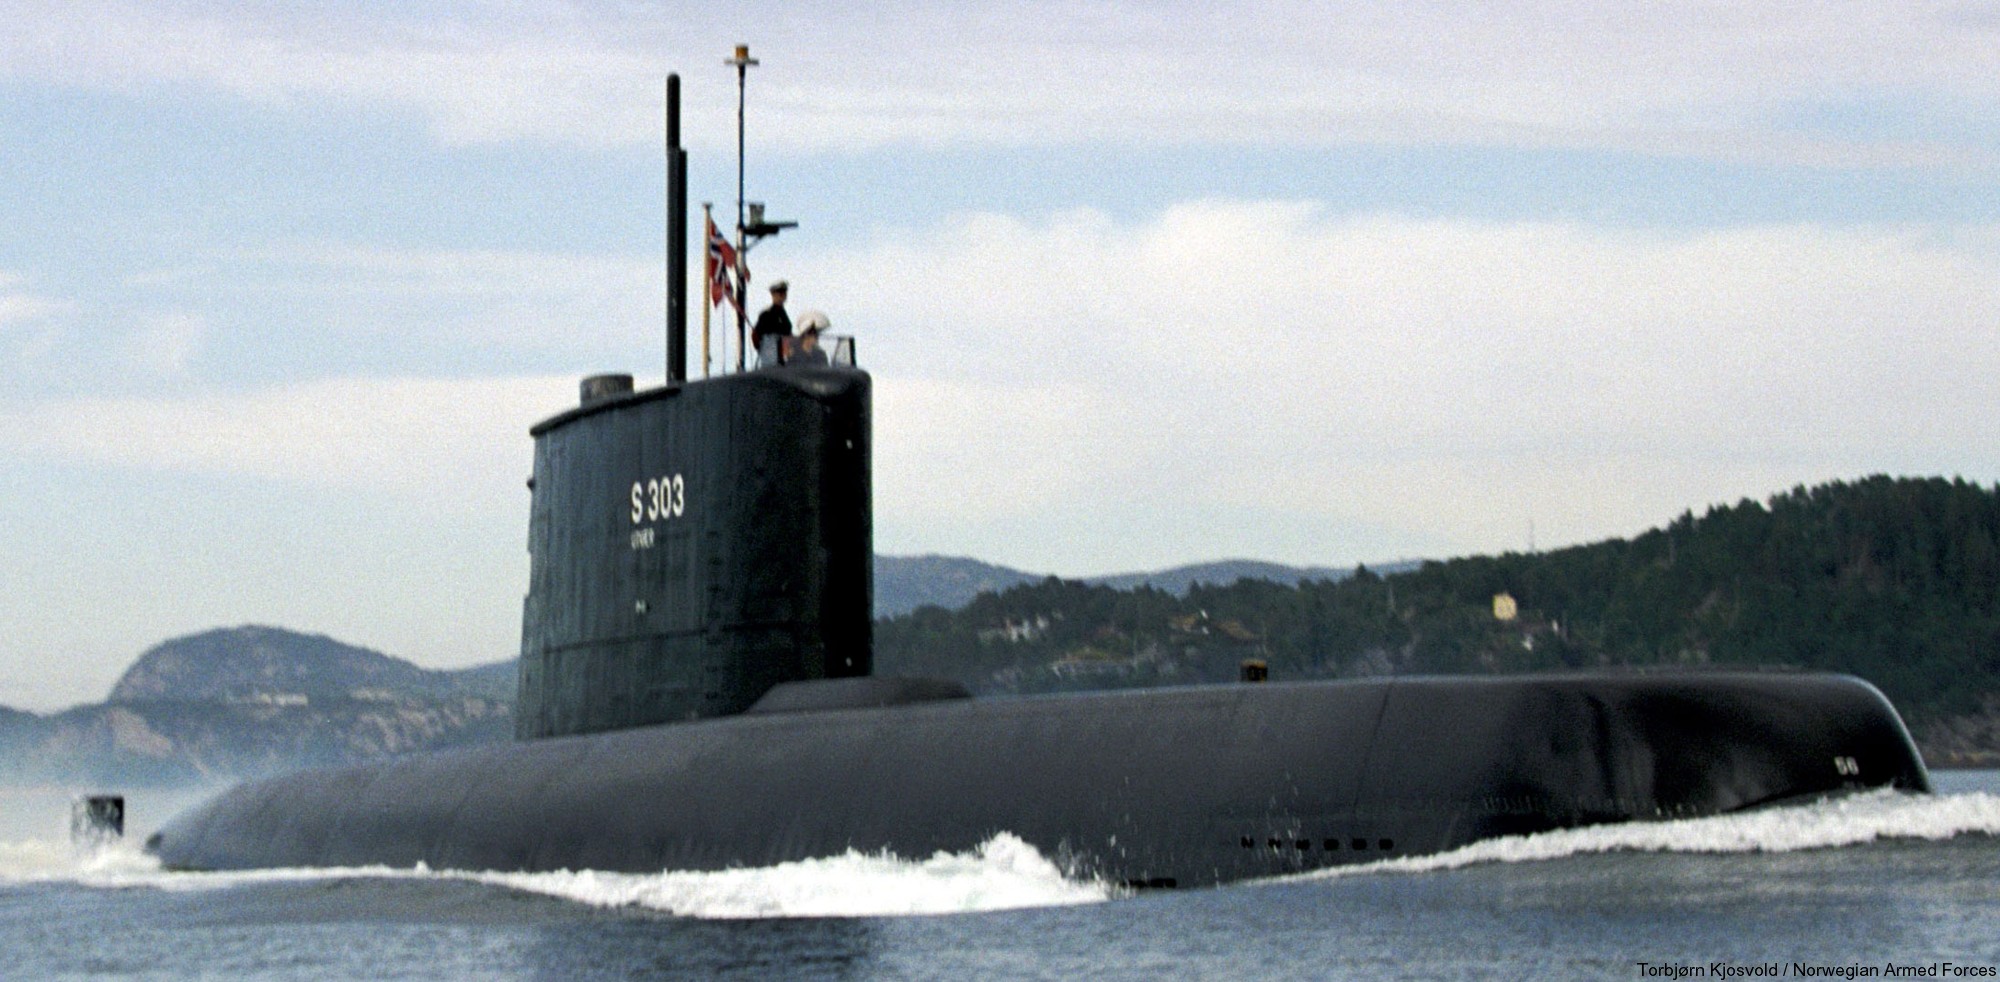 s-303 hnoms knm utvaer ula class submarine type 210 attack ssk undervannsbåt royal norwegian navy sjøforsvaret 04